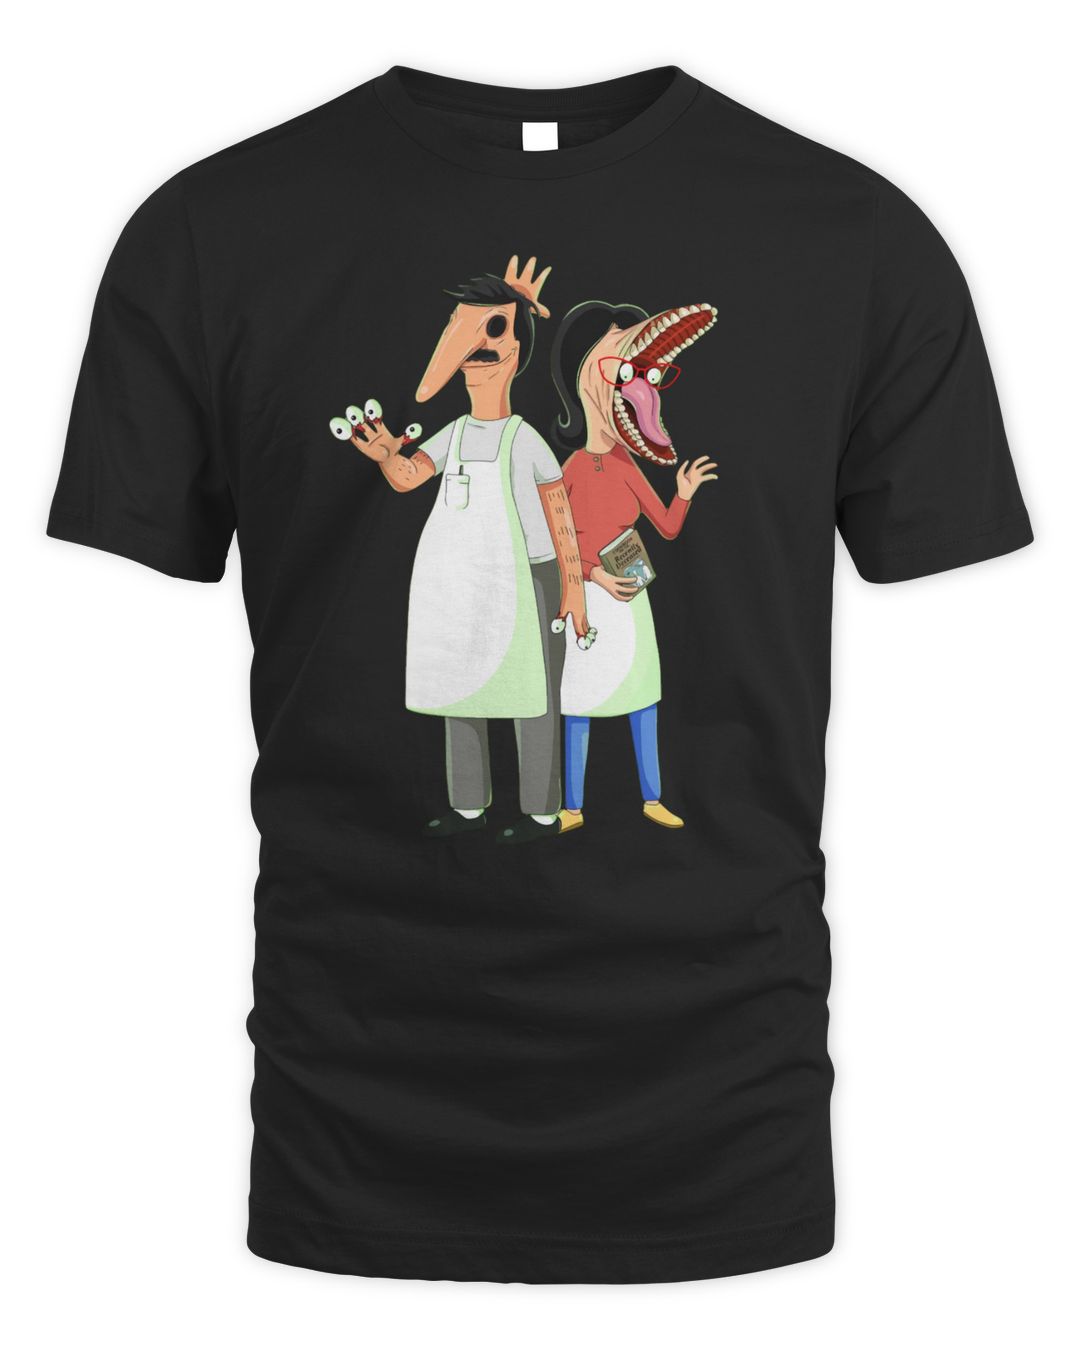 Bobs Burgers Shirt